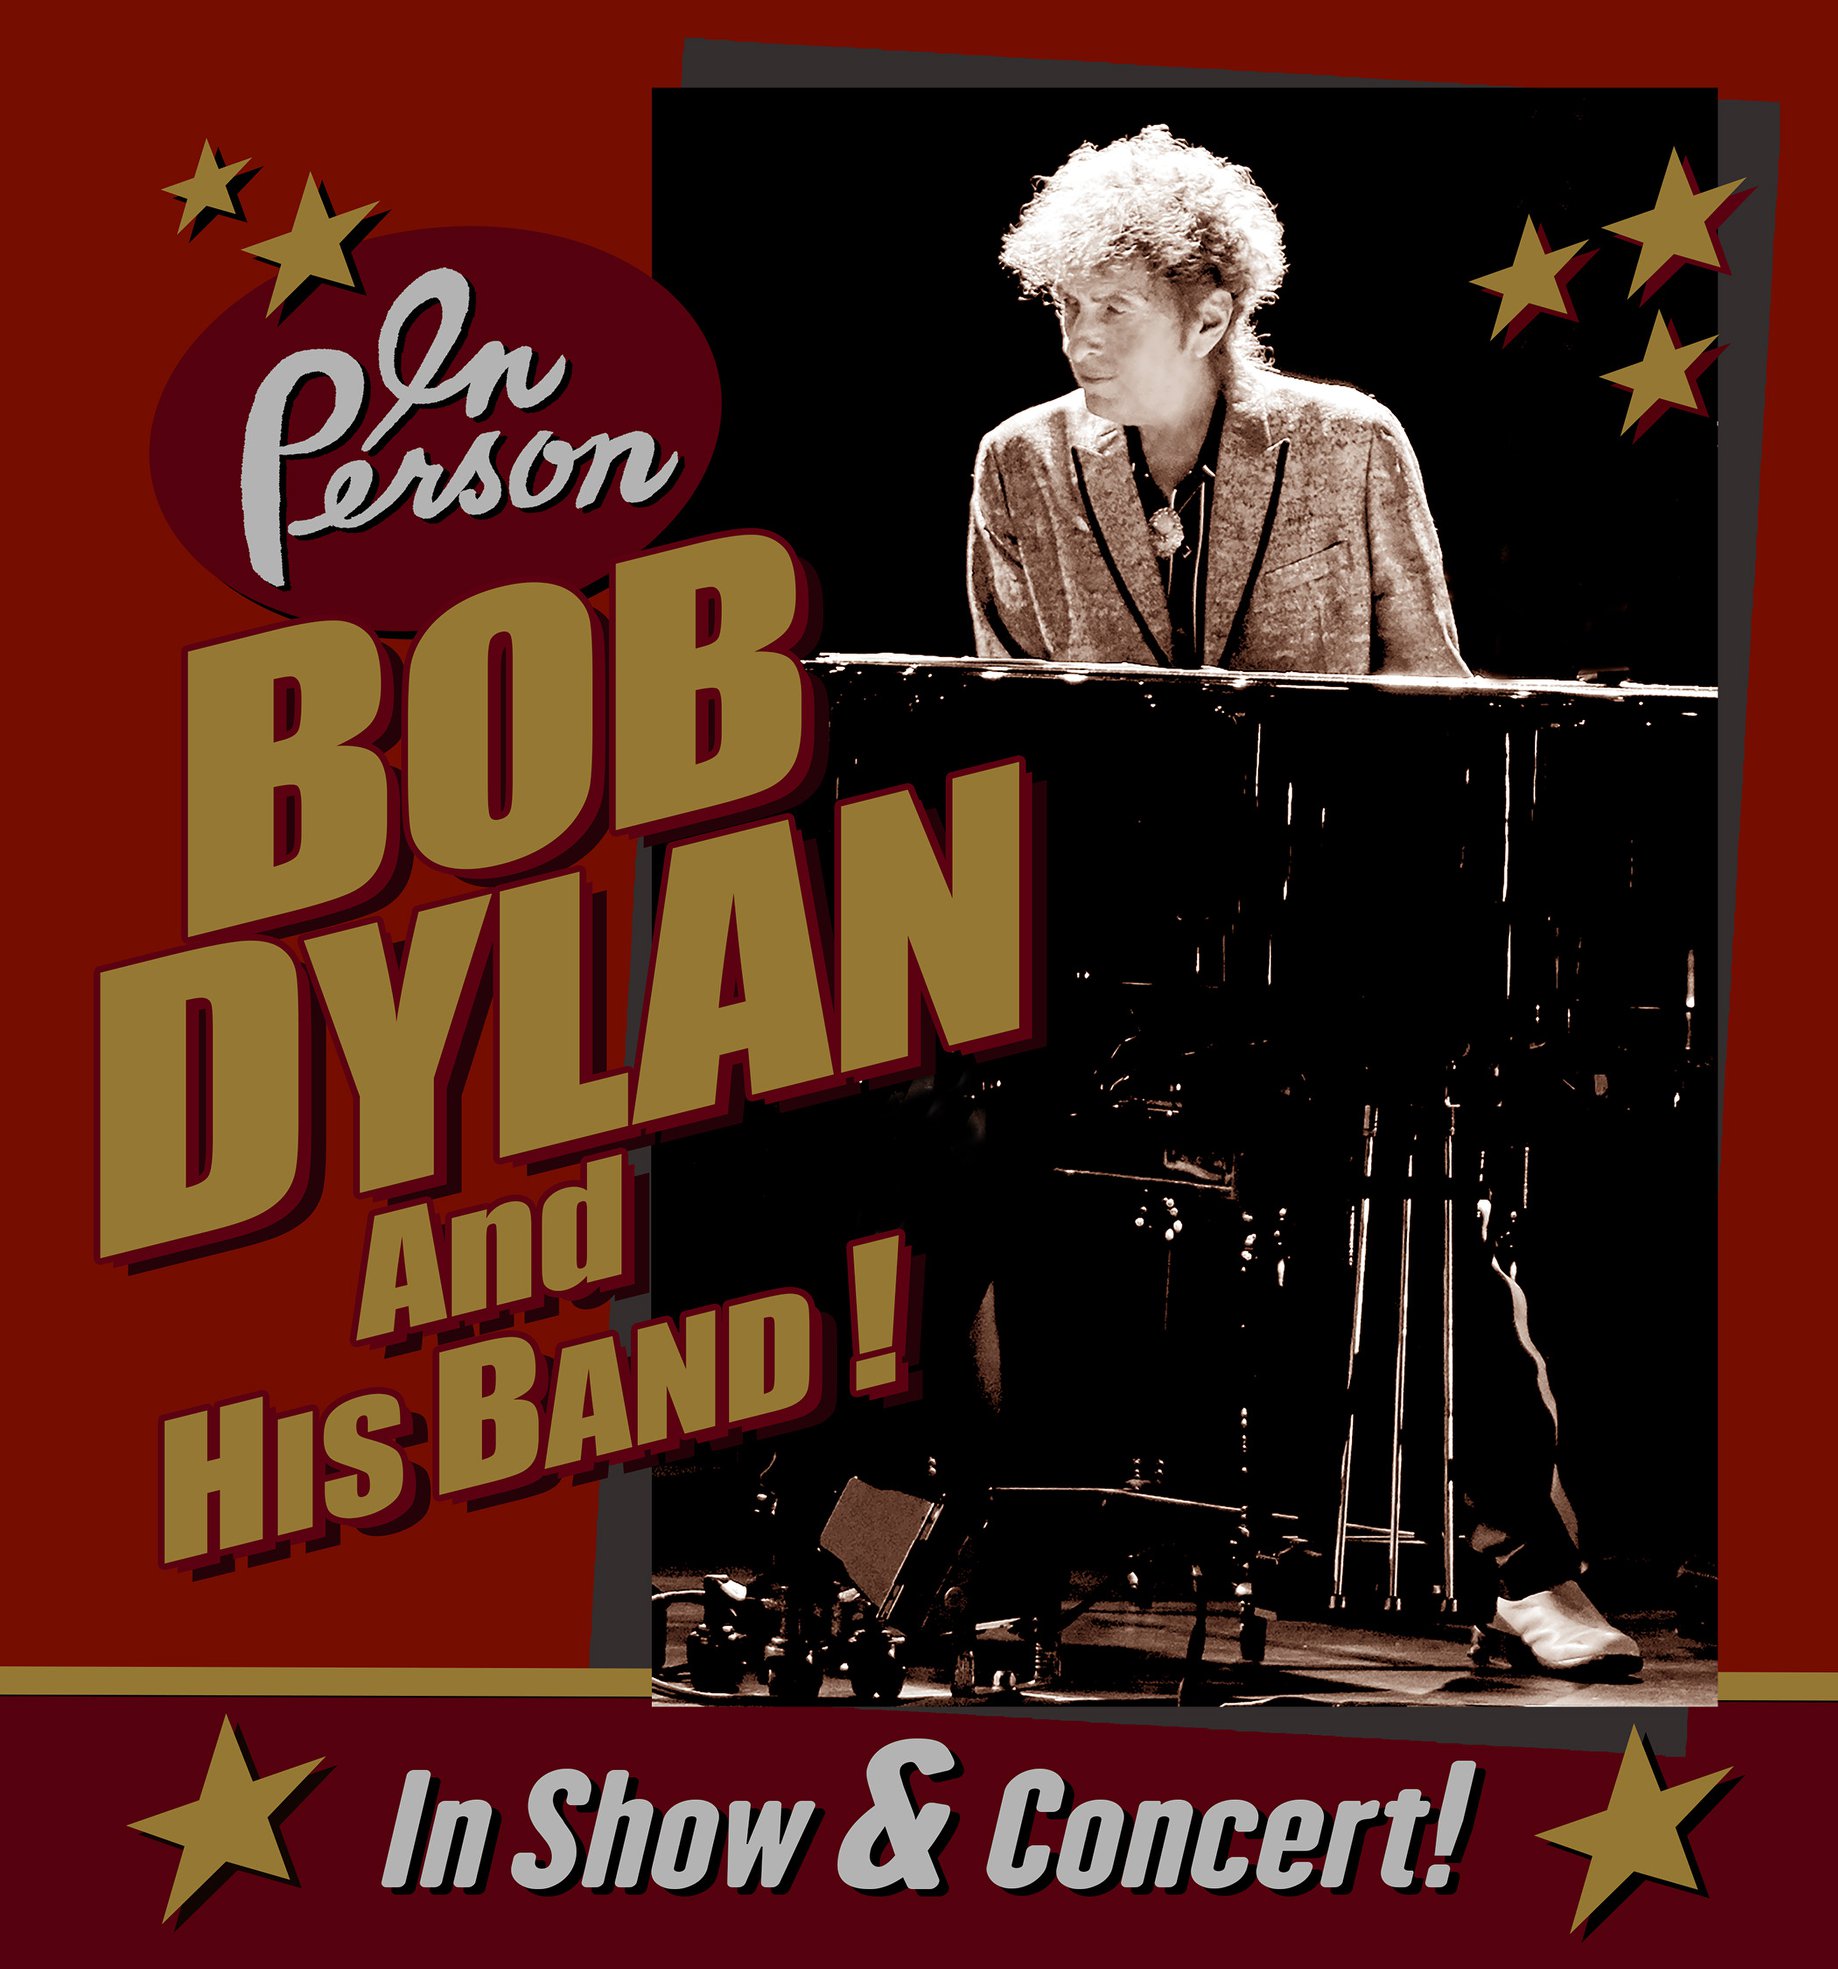 Bob Dylan Cancels 2020 U S Tour Best Classic Bands